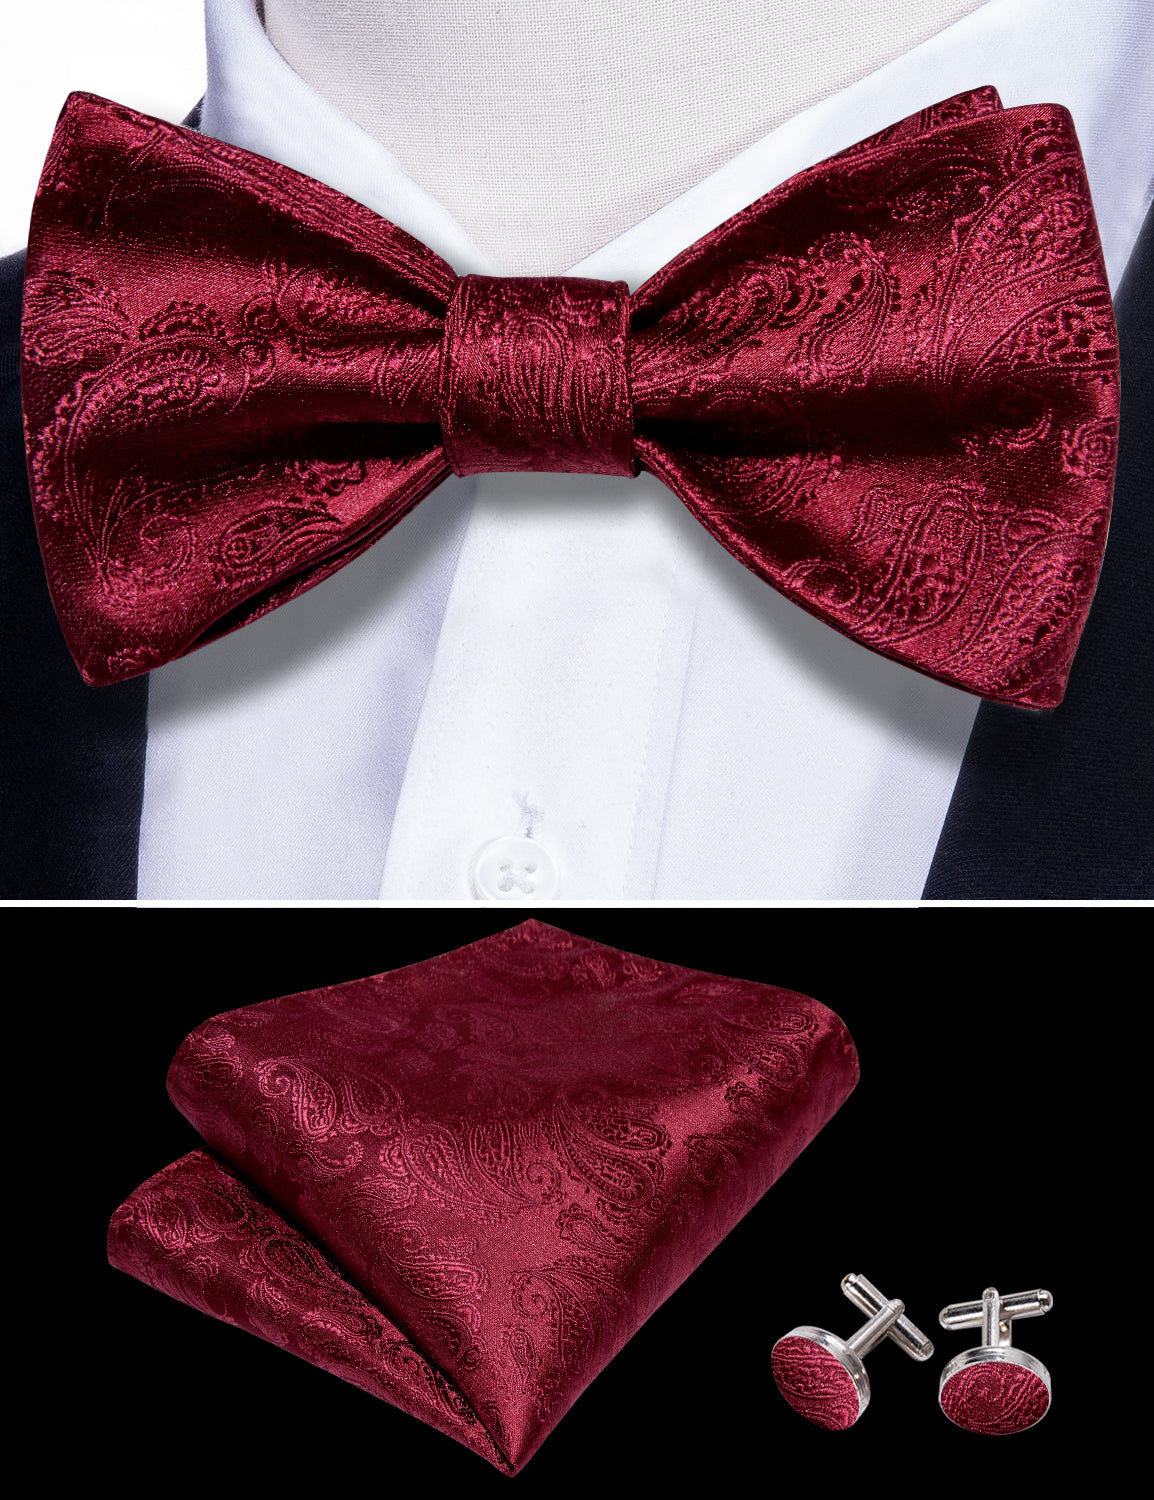 Barry.wang Red Tie Paisley Silk Self-Tie Bow Tie Hanky Cufflinks Set for Men Wedding